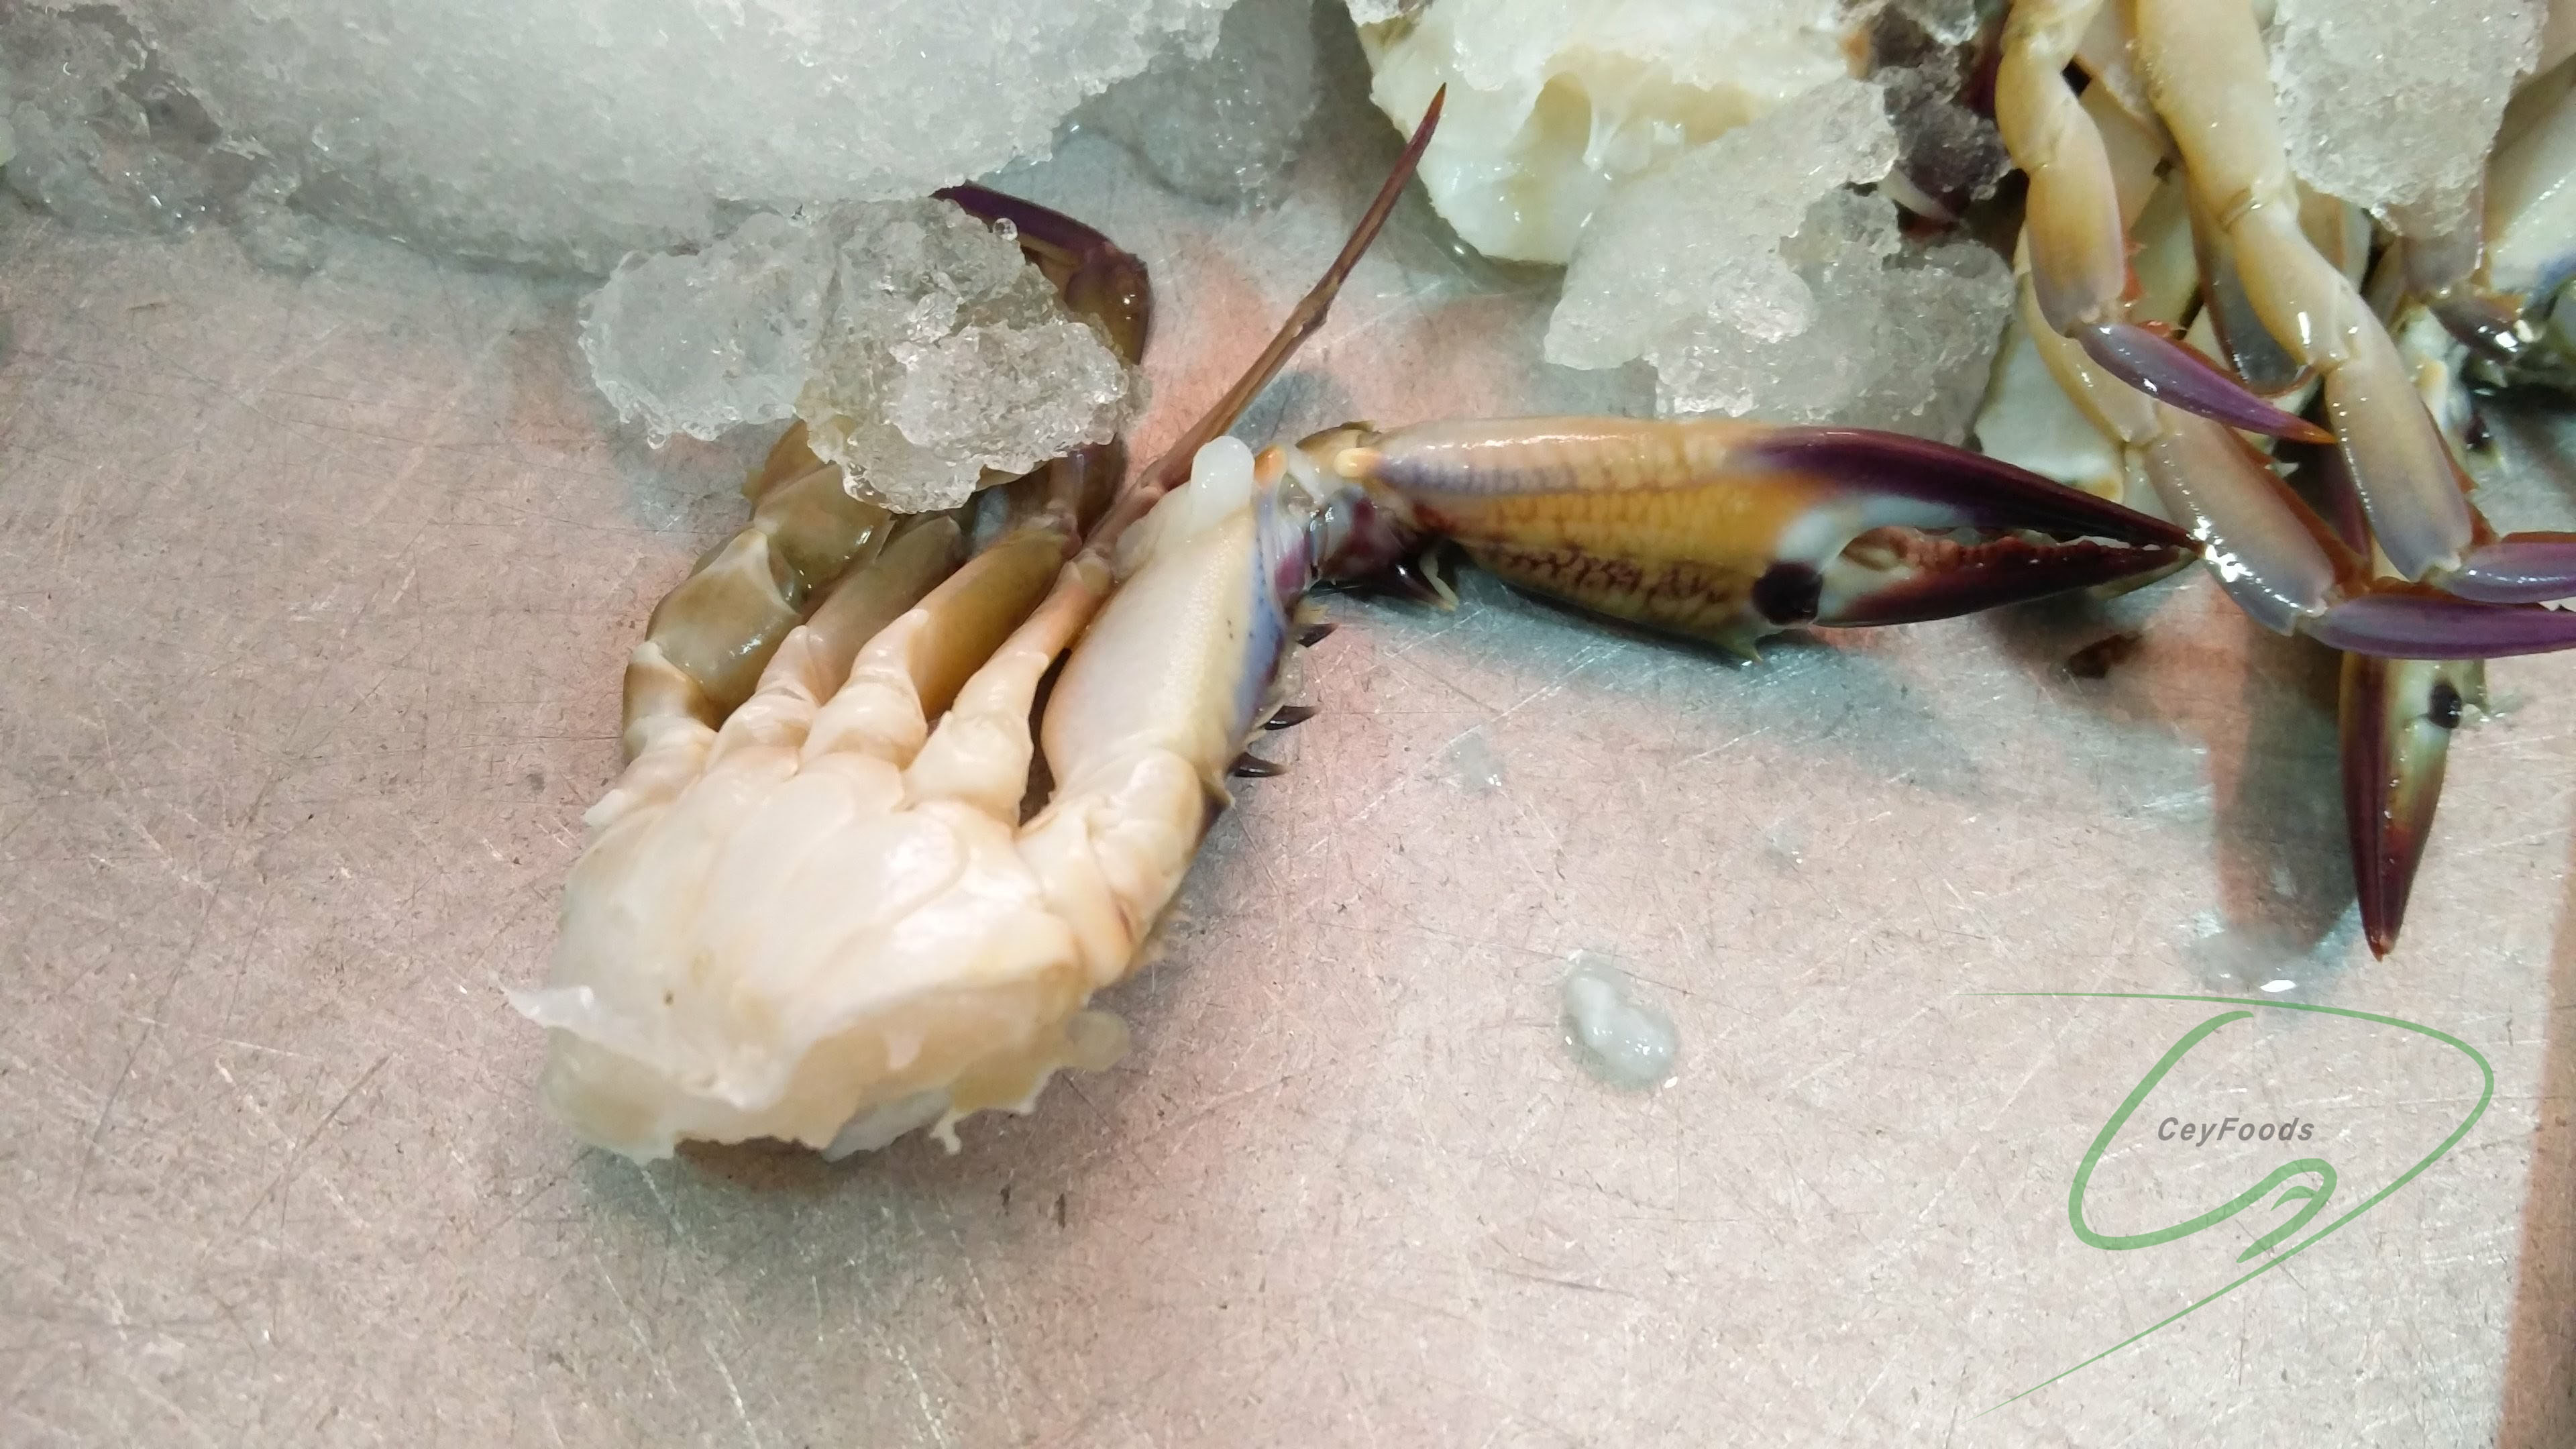 swimming crab ceylon foods exports sri lanka ceyfoods seafood processor exporter